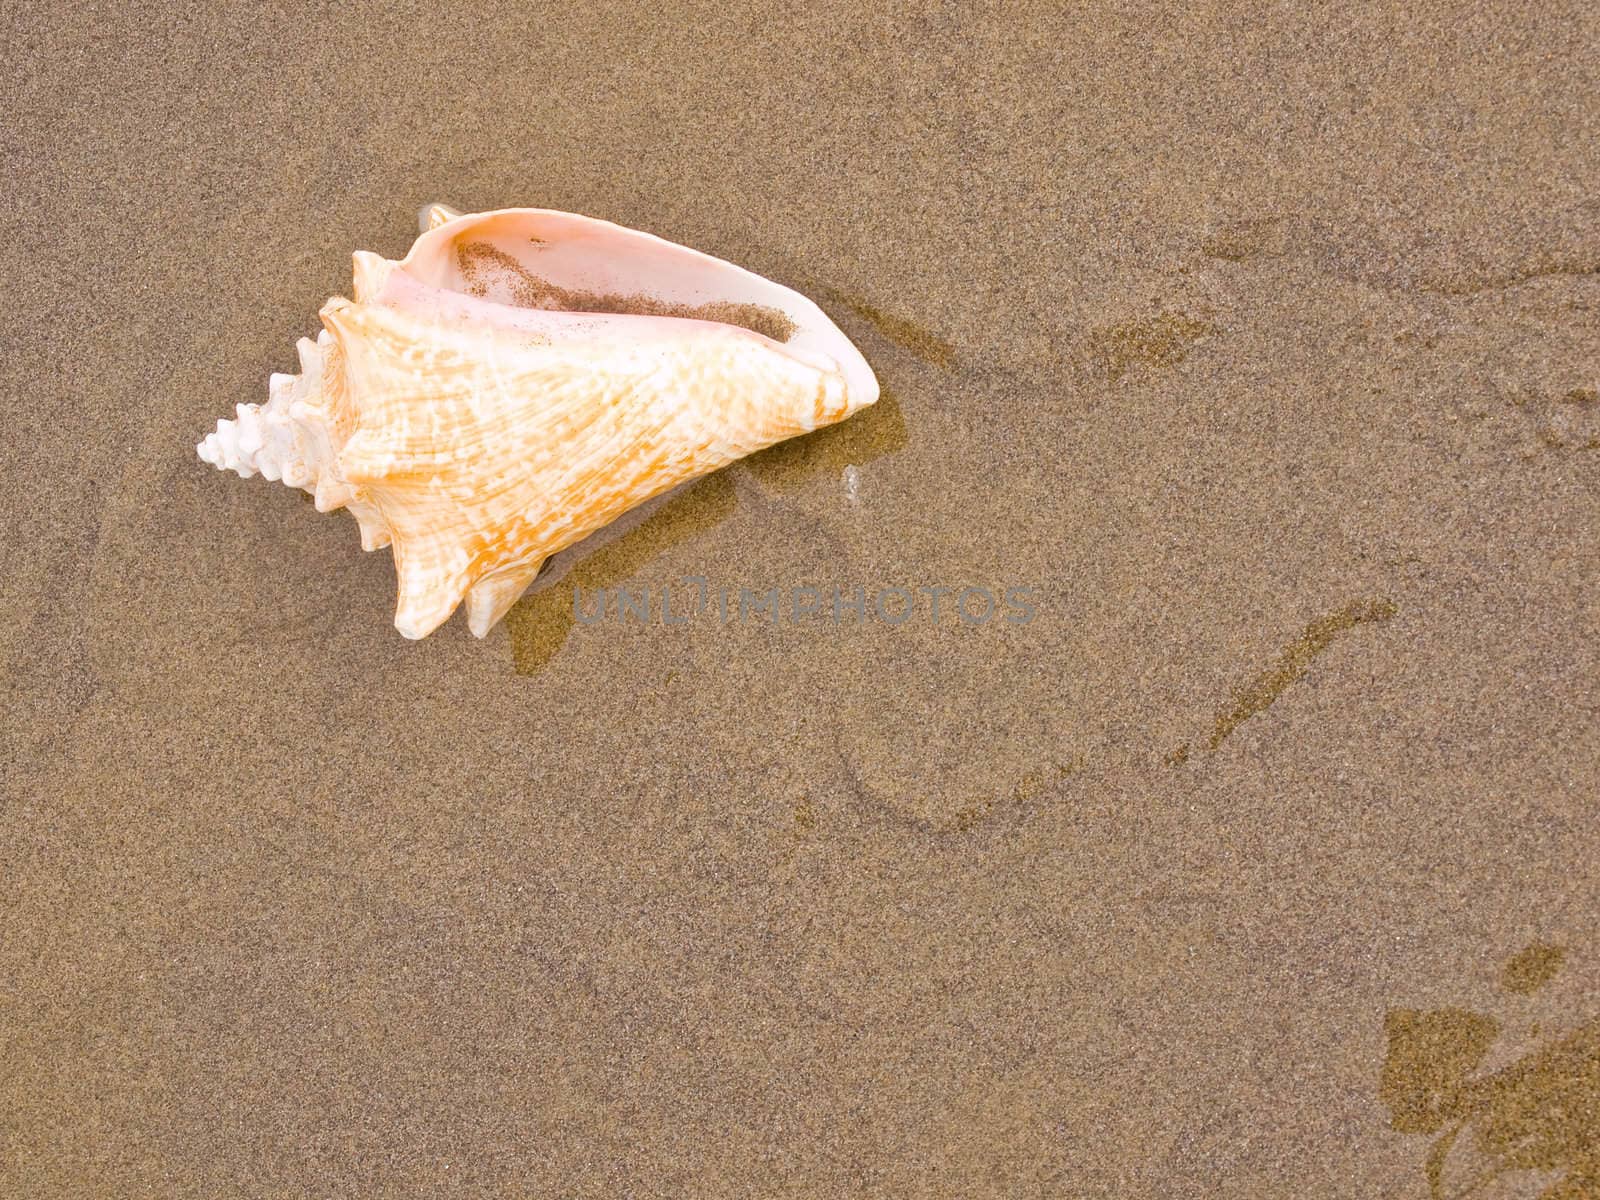 Conch Shell on a Wet Sandy Beach